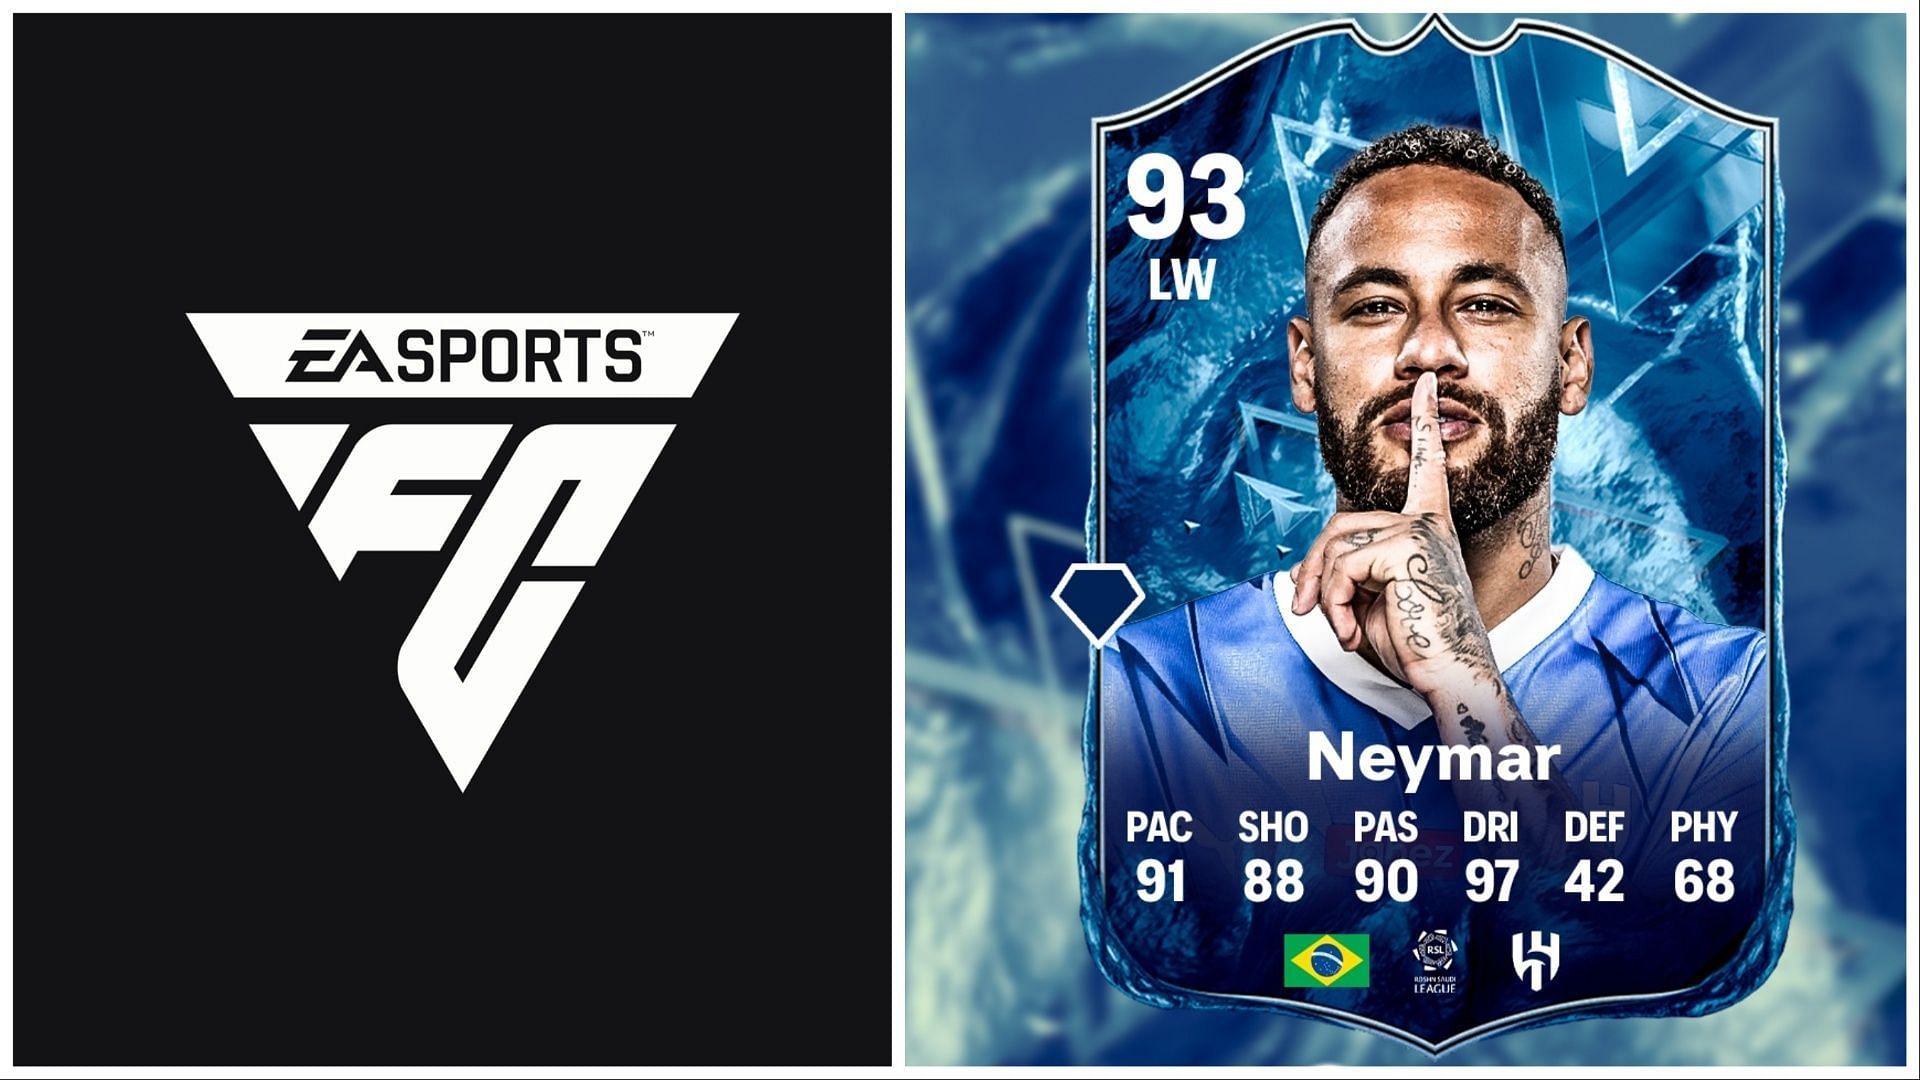 Versus Ice Neymar has been leaked (Images via EA Sports and Twitter/FIFATradingRomania)